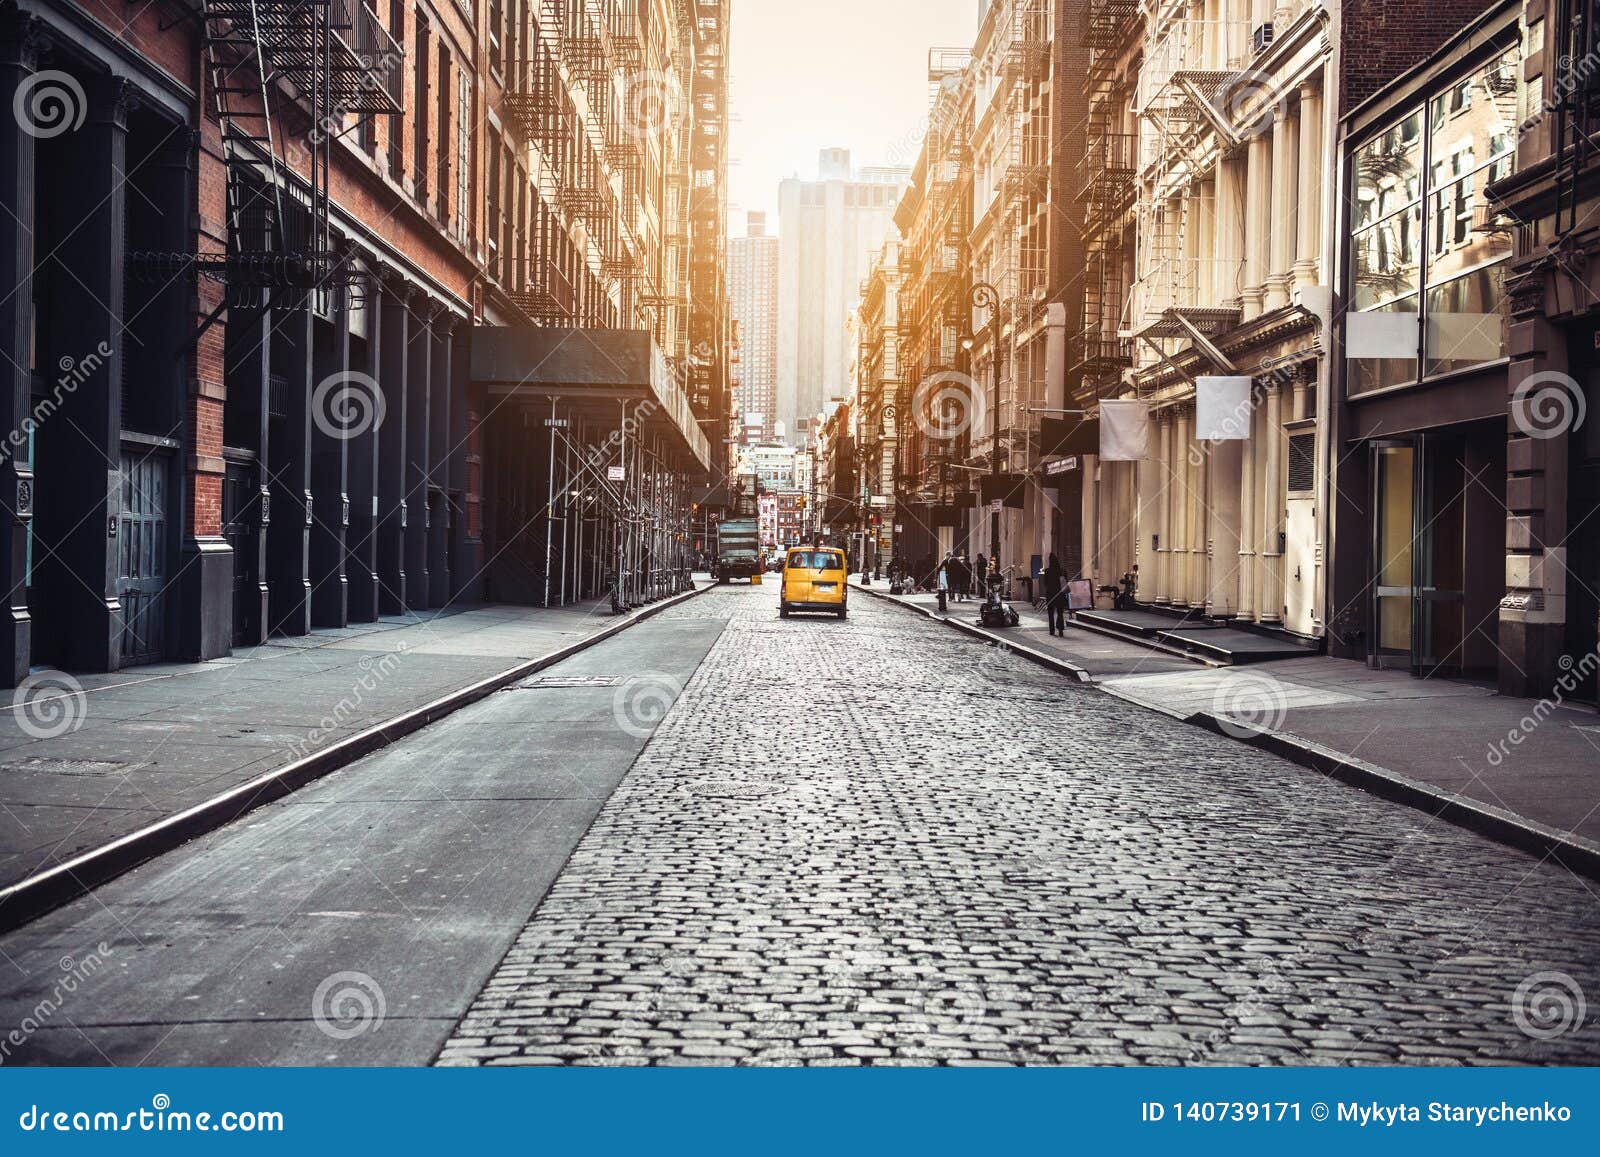 New York City Manhattan SoHo Street at Sunset Time Background. Stock Image  - Image of block, neighborhood: 140739171